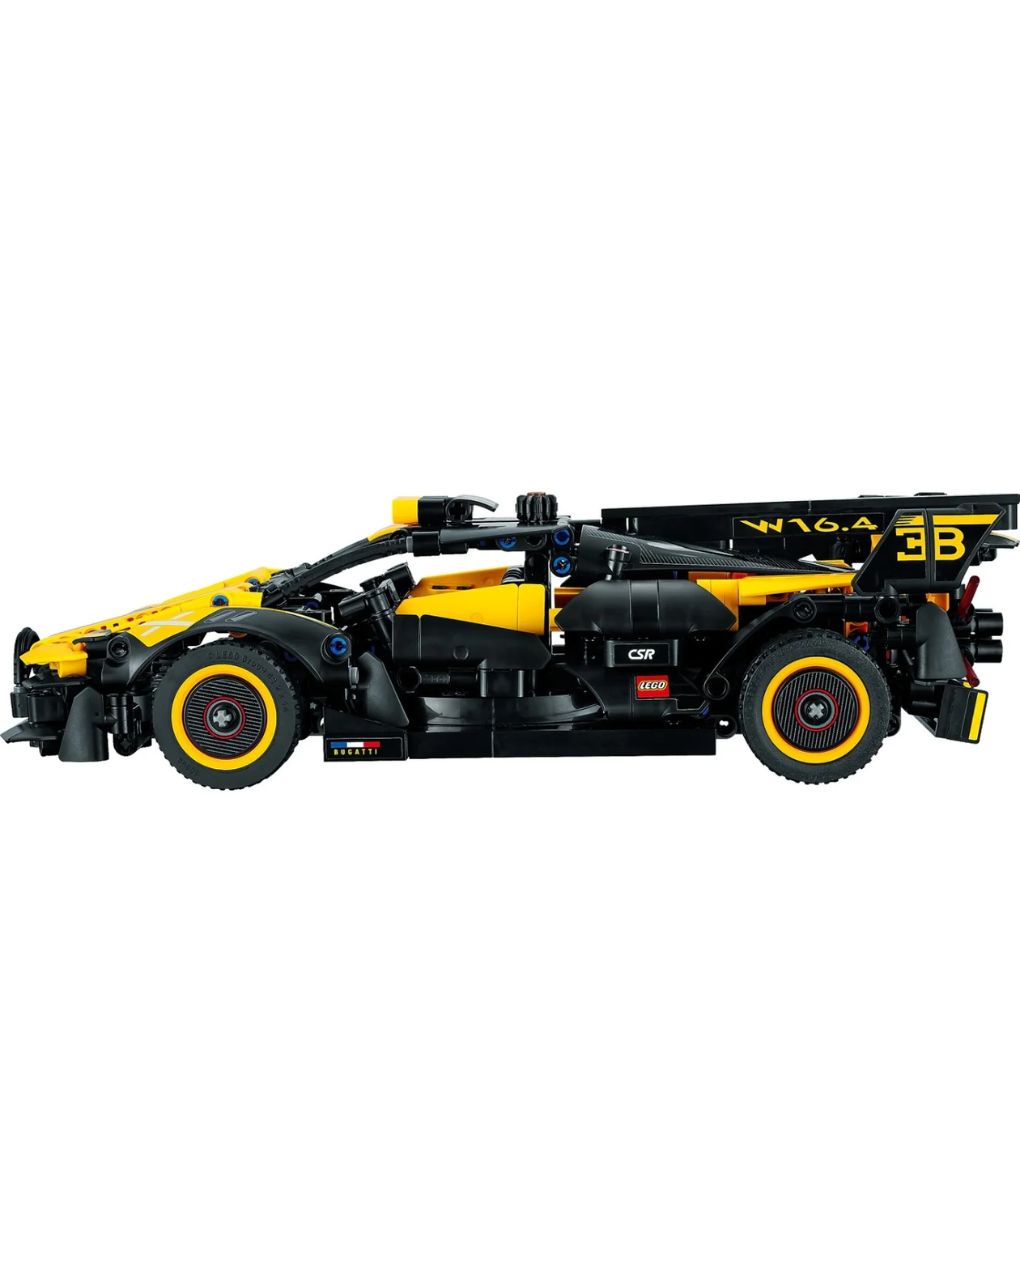 Lego technic bugatti bolide 42151 - Lego, Lego Technic